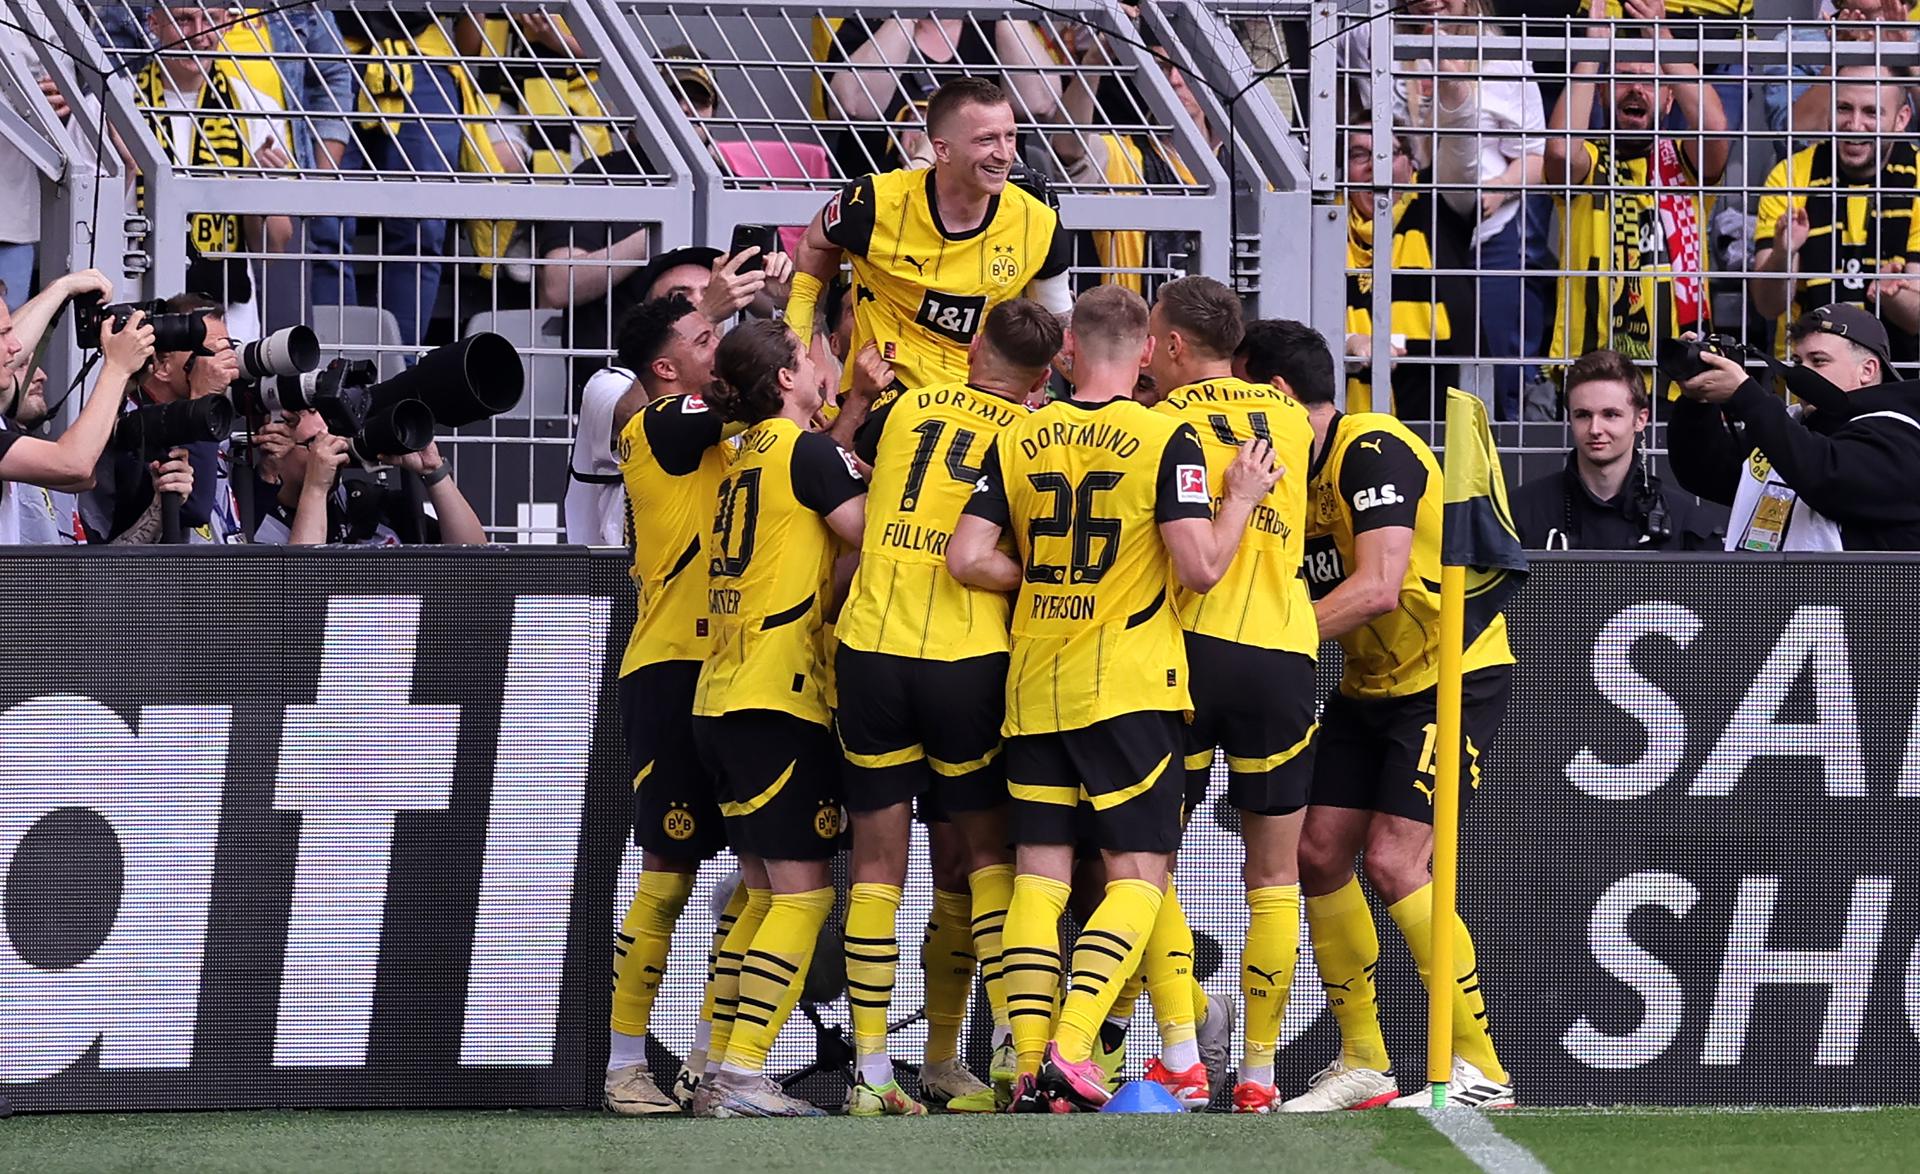 ALT4-0. El Dortmund golea al colista en la despedida de Reus